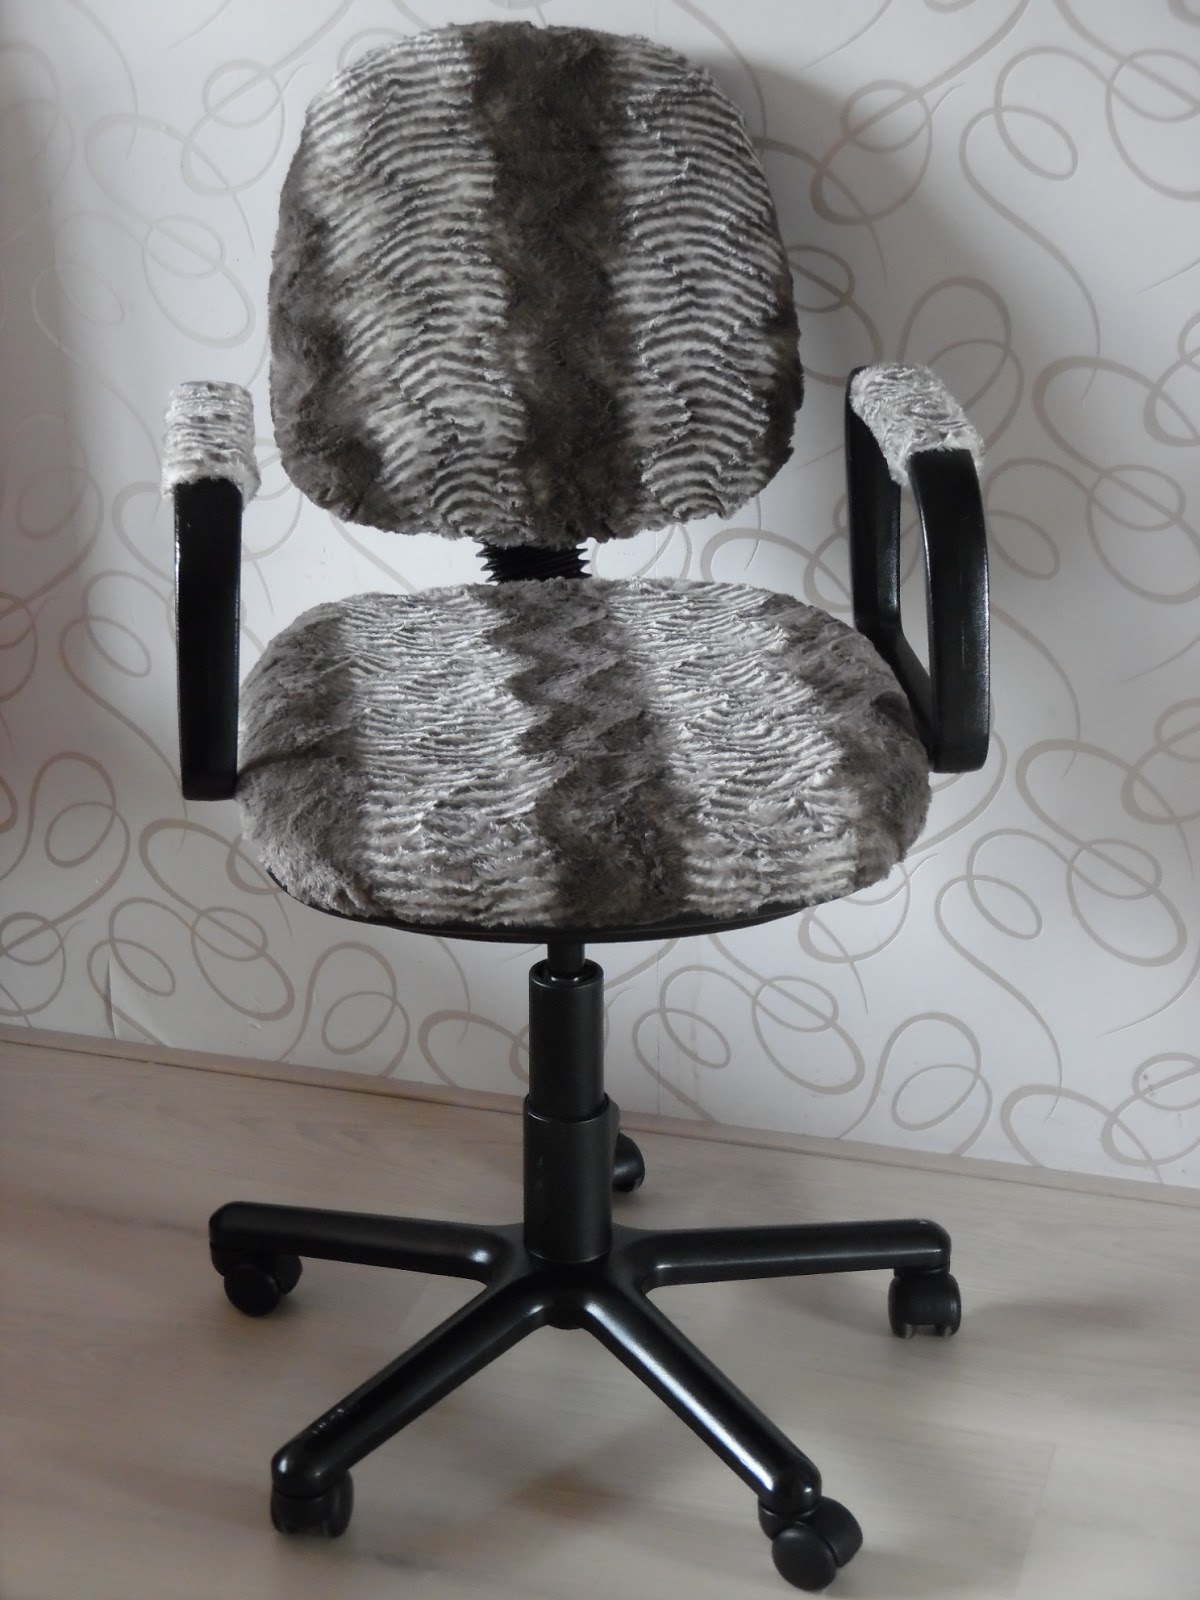 DIY fur chair reupholster (via ahappyhomeinholland)